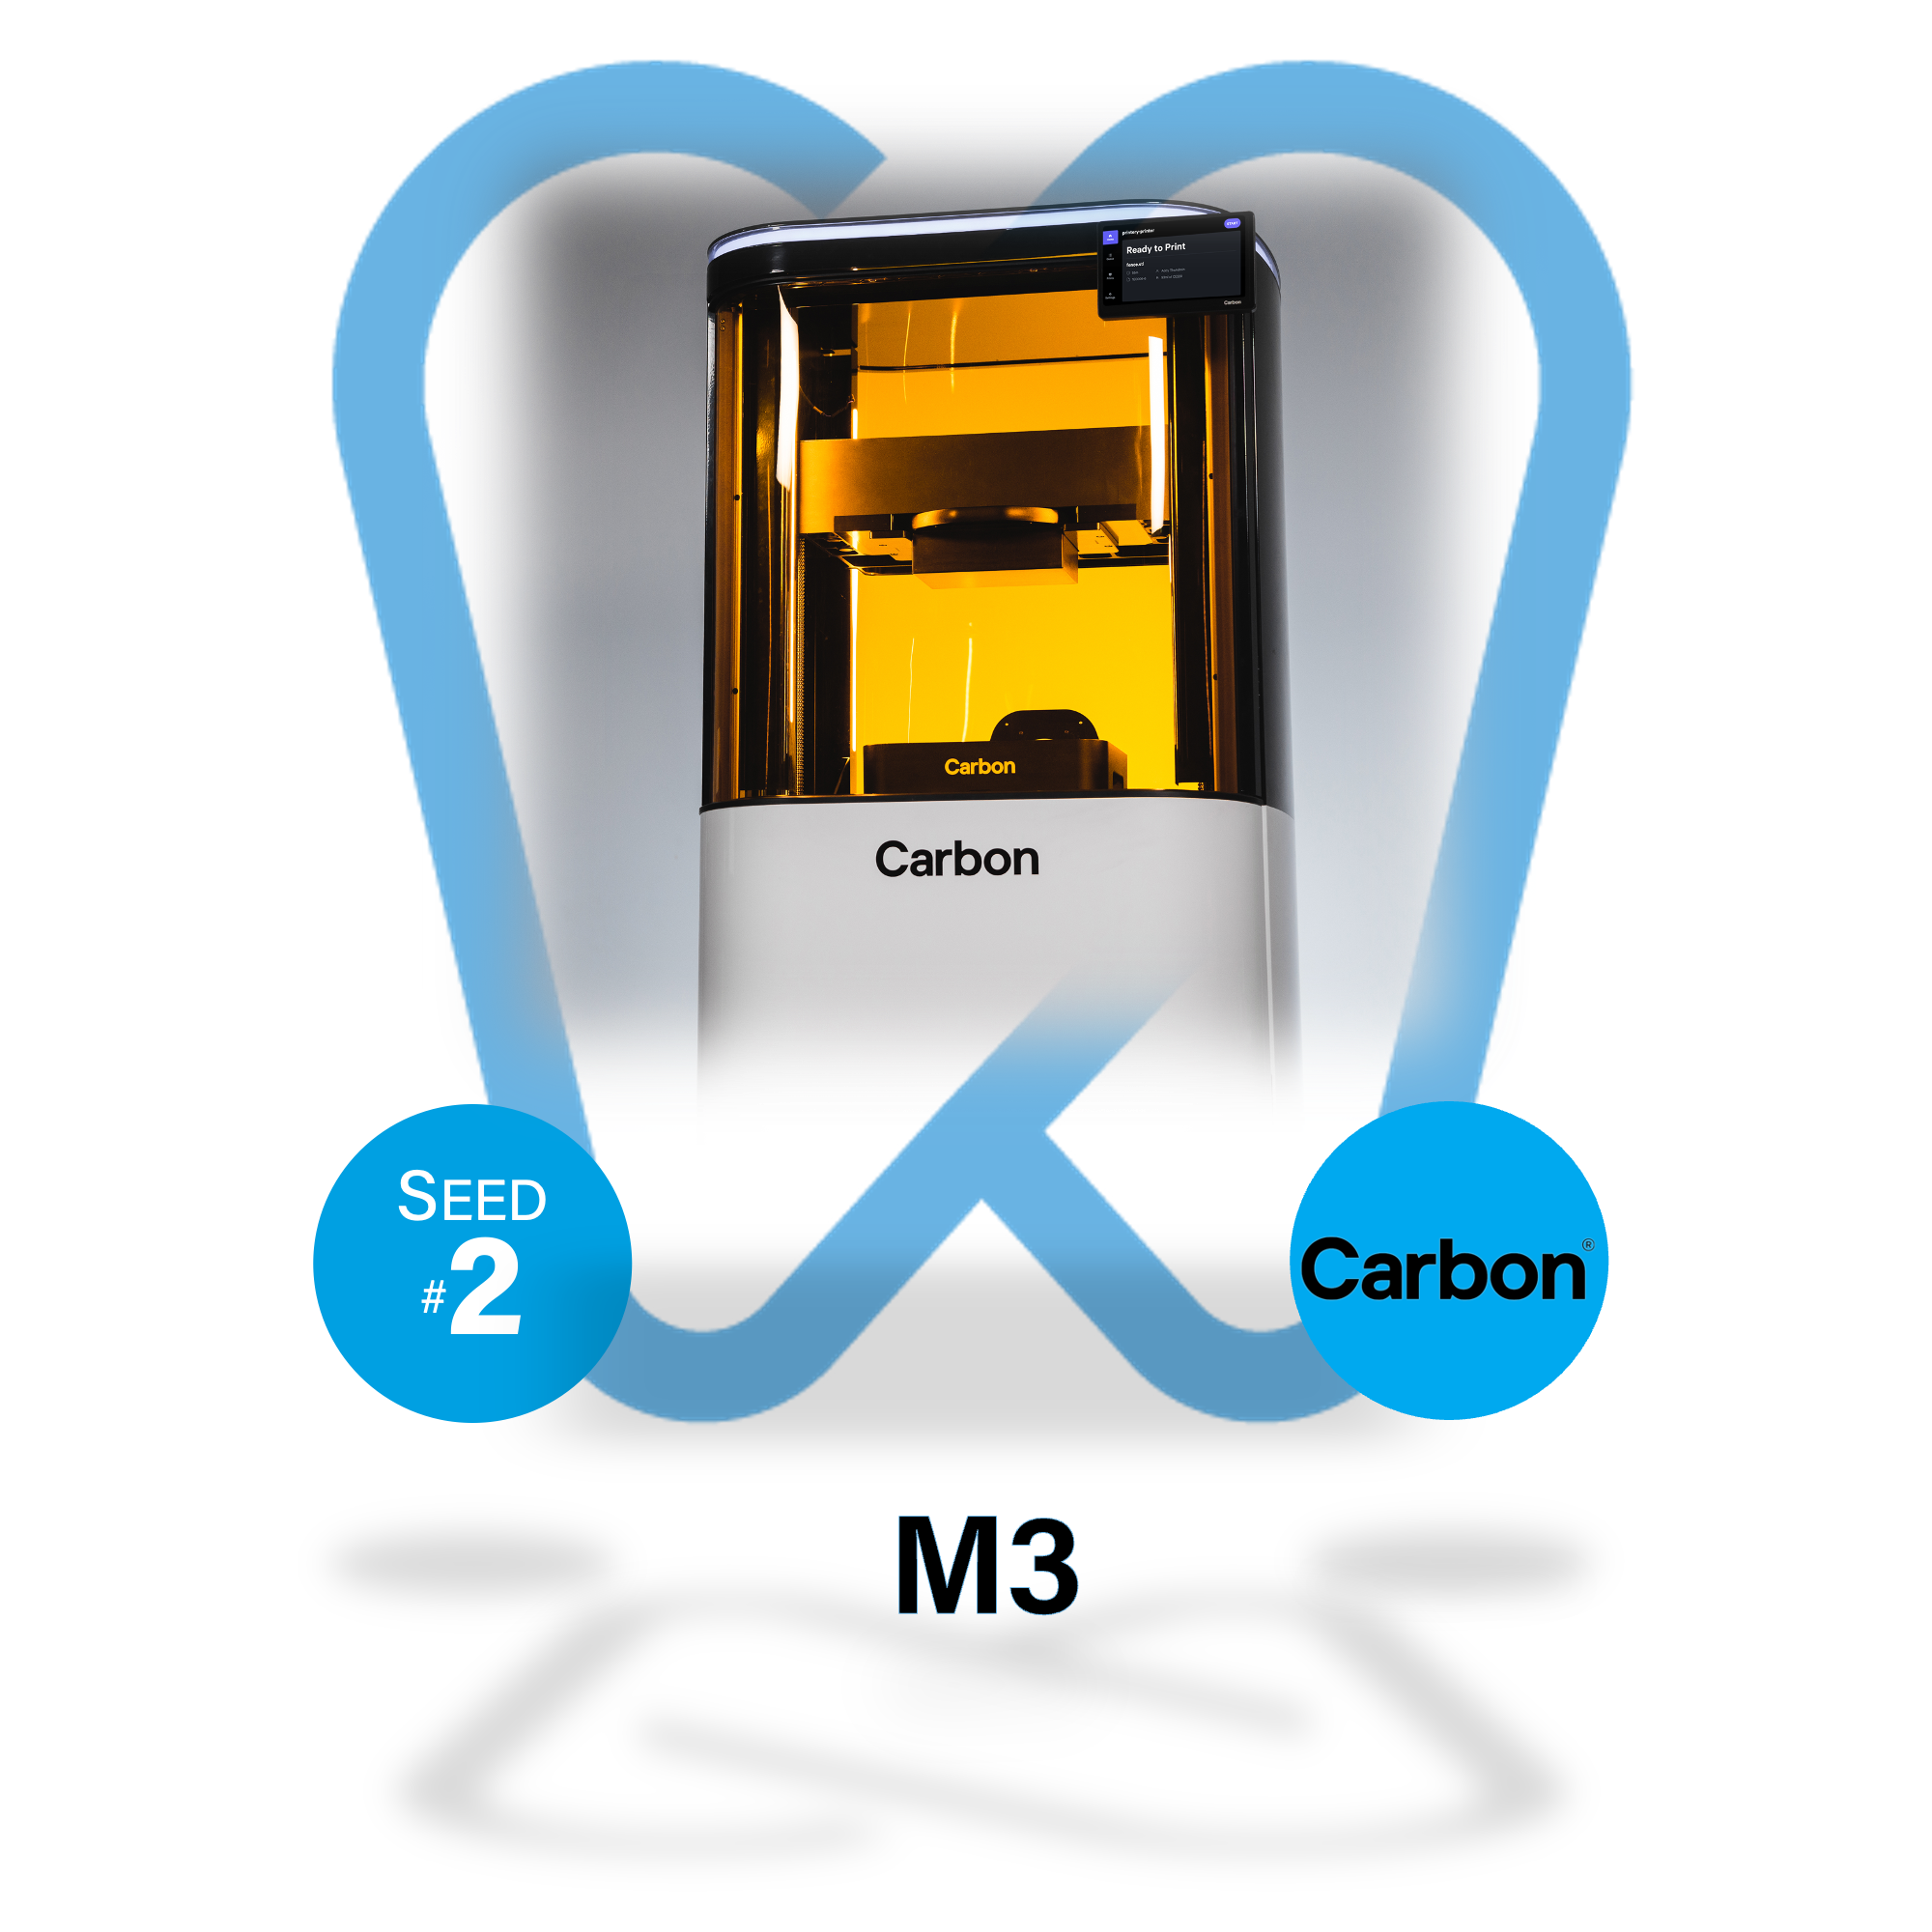 Carbon M3 printer